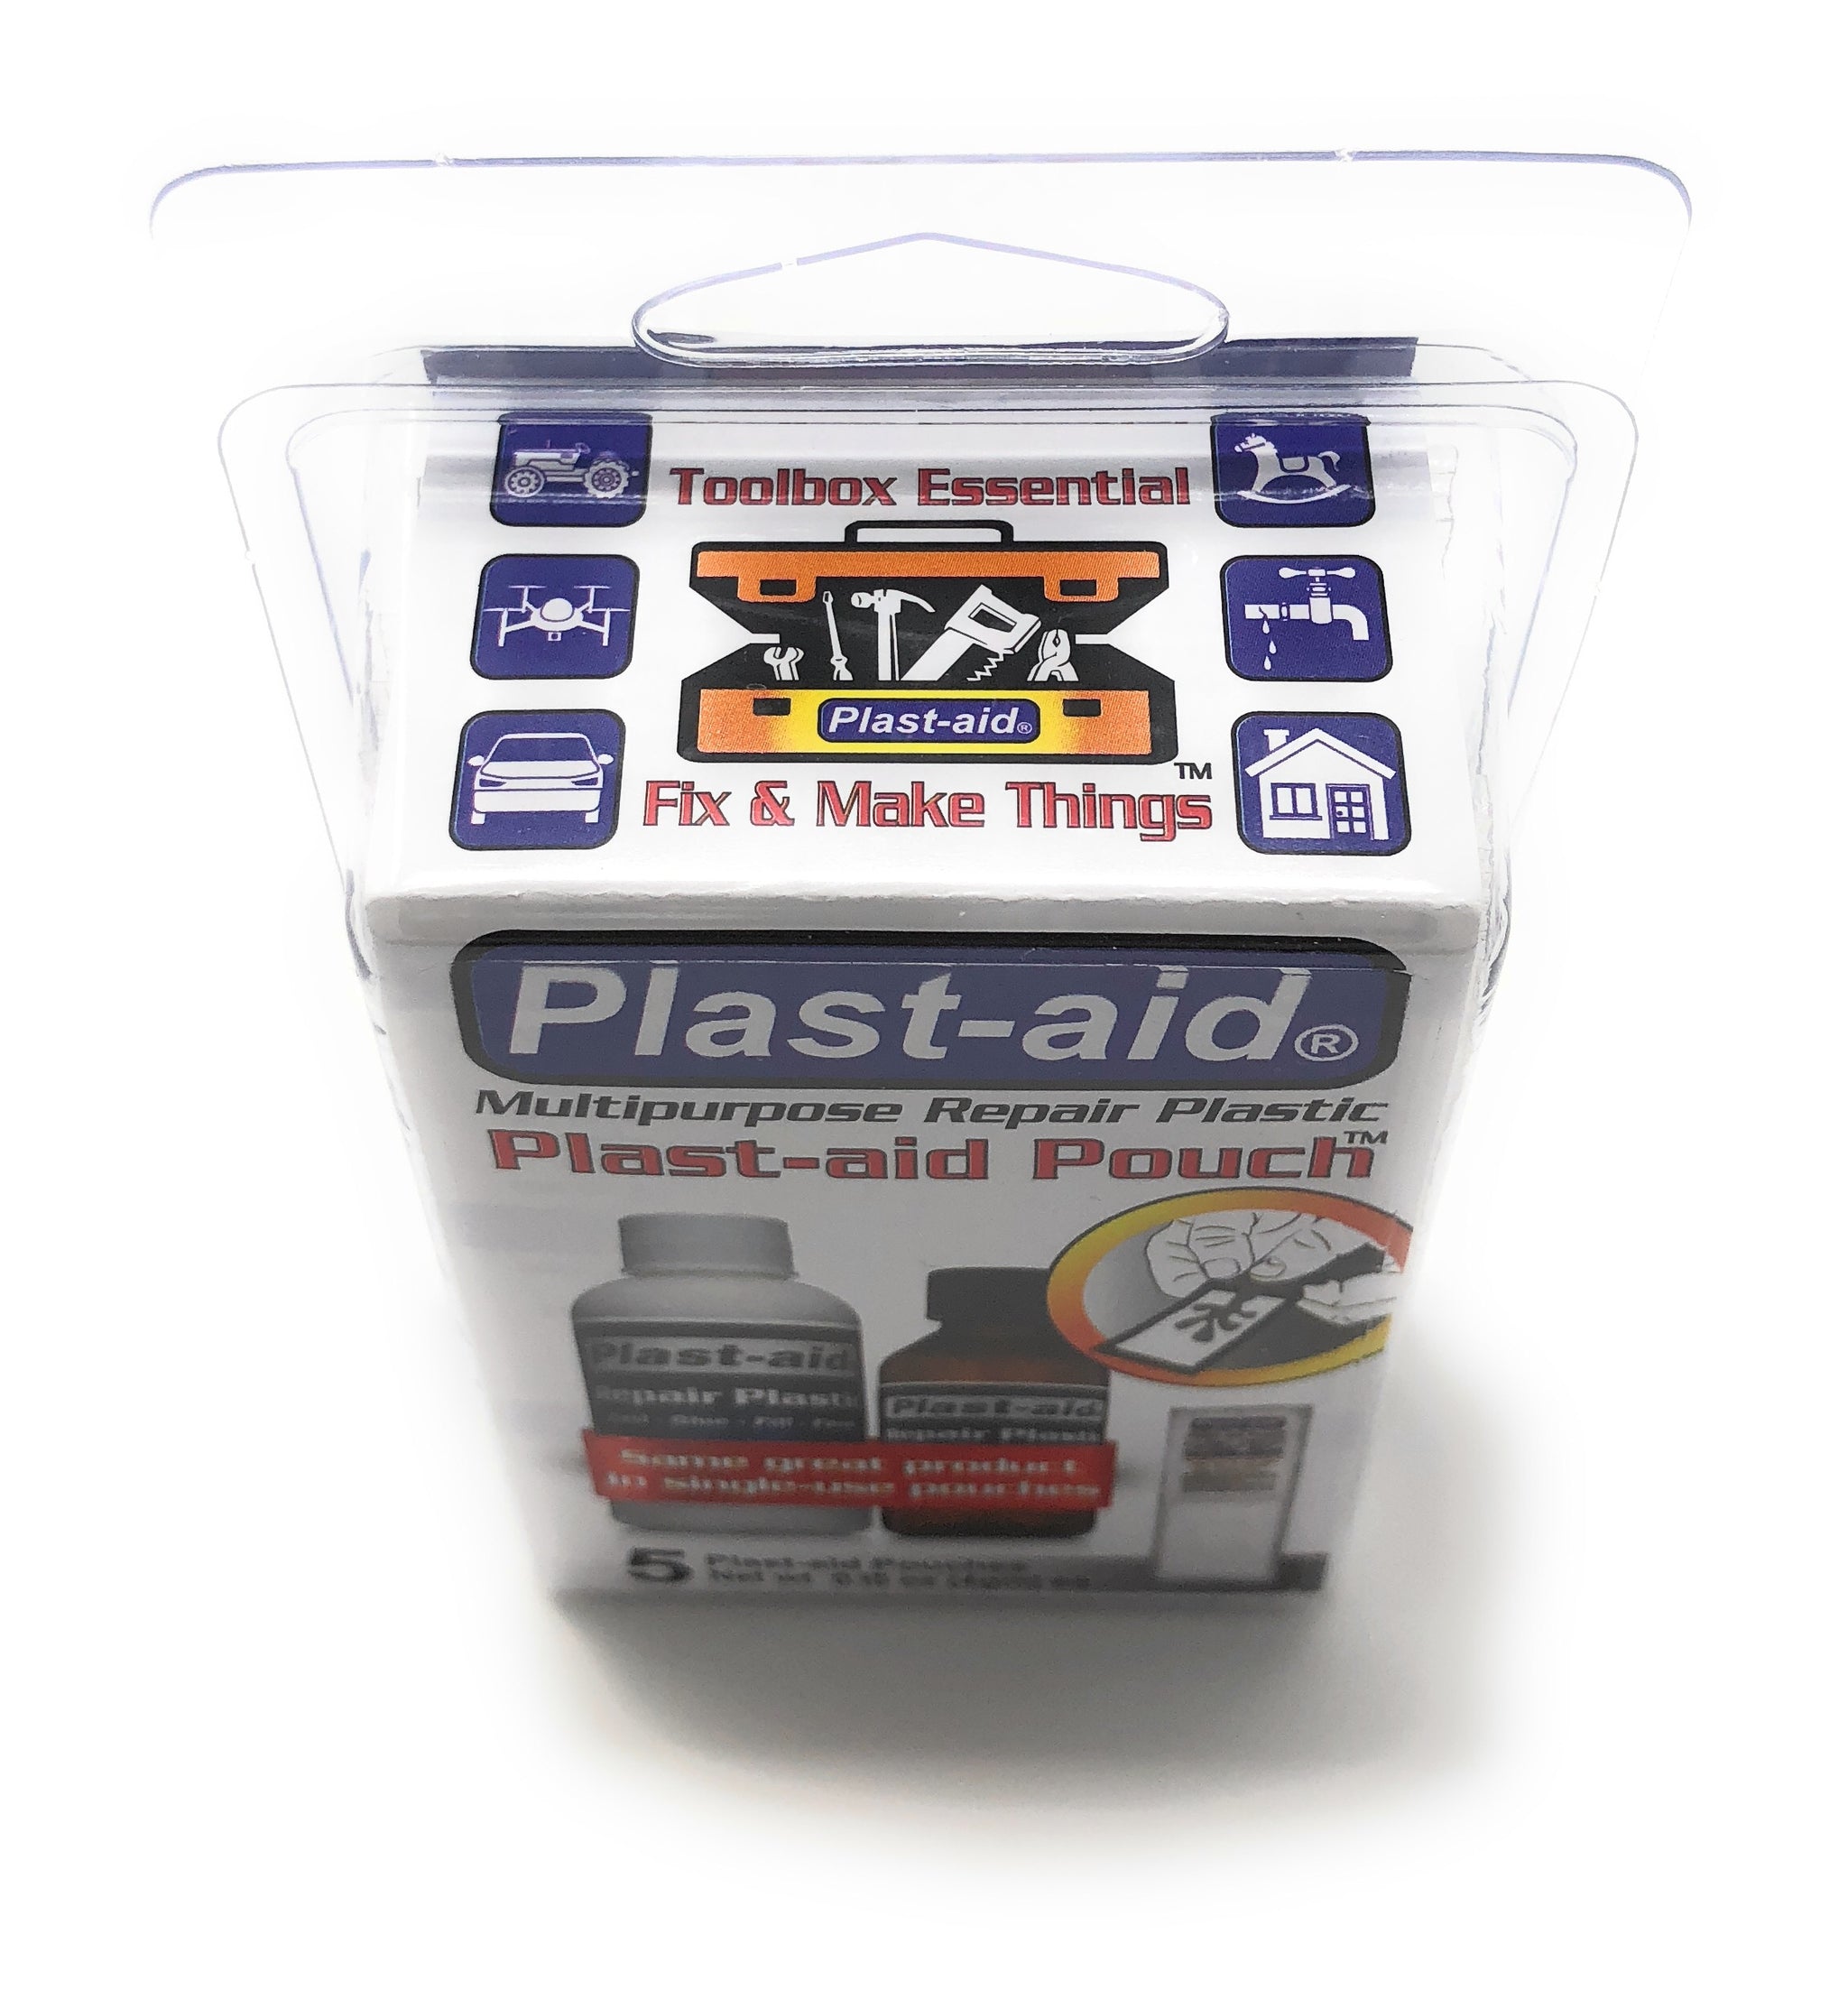 Plast-aid Pouches - 5 Single Use 0.15 oz ea